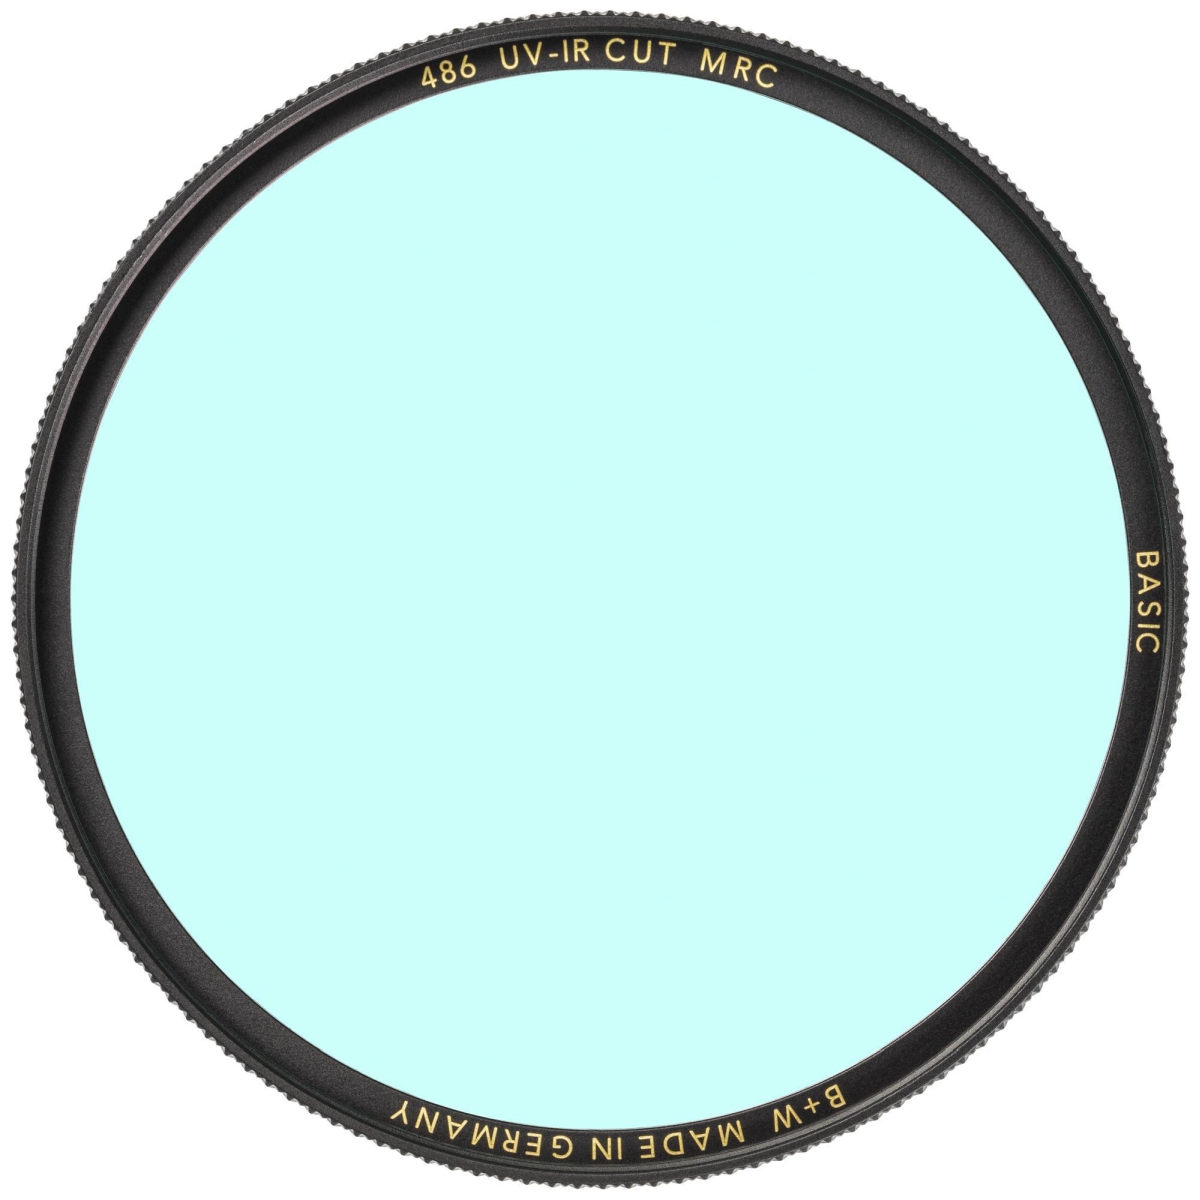 B+W UV-IR Cut 46 mm MRC Basic